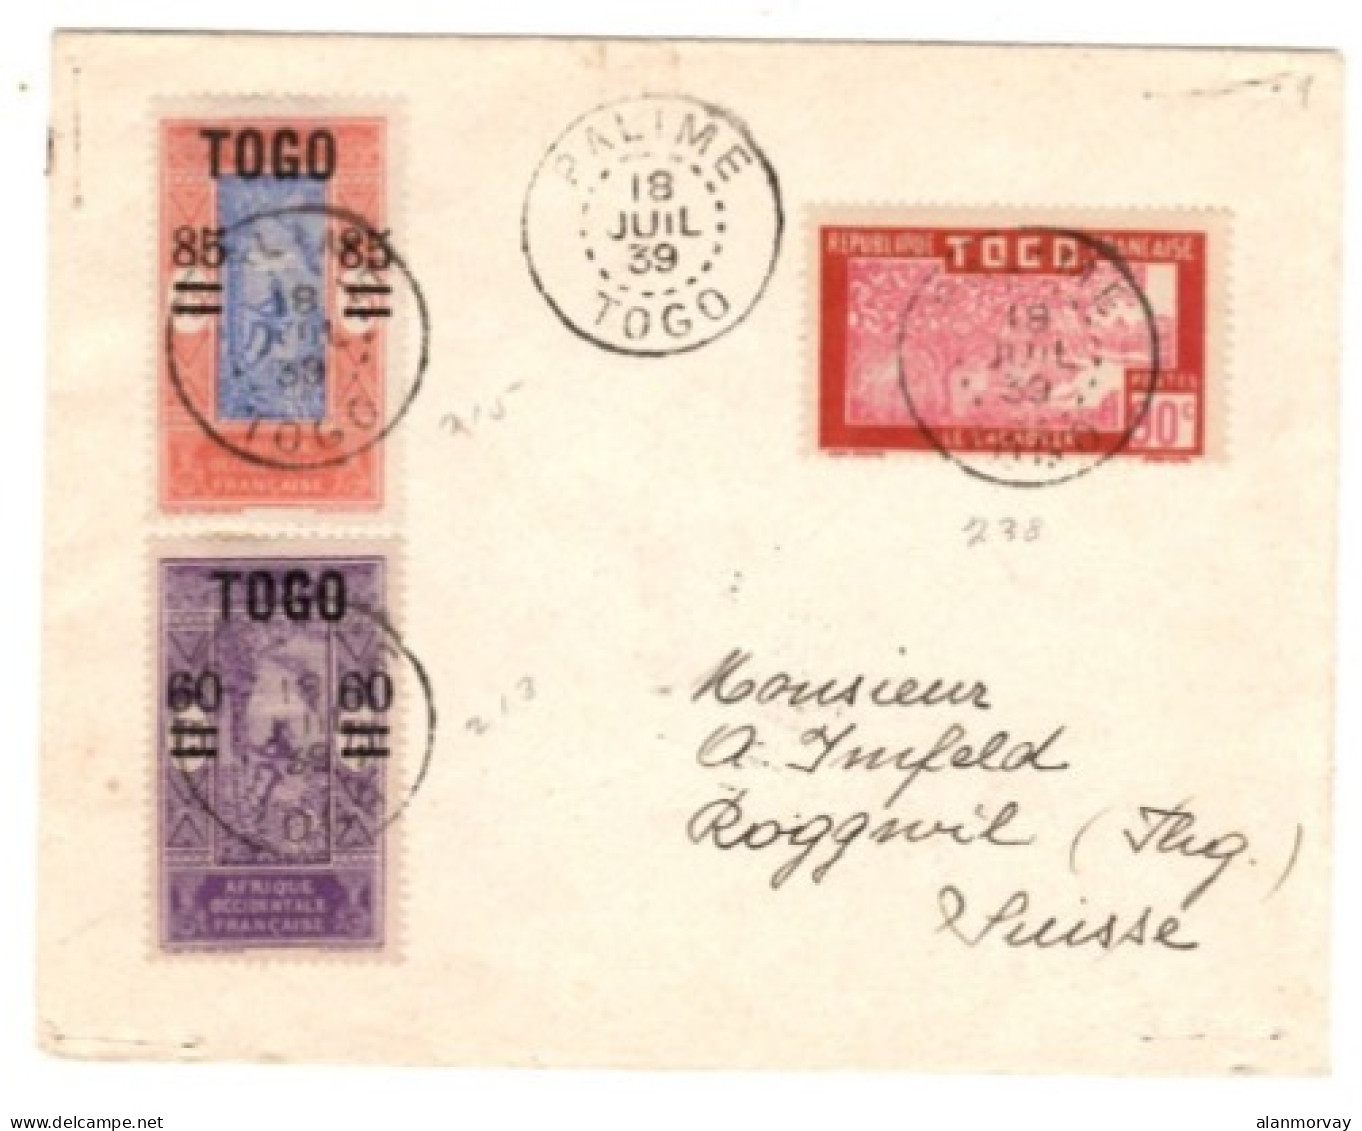 Togo - July 18, 1939 Palime Cover To Switzerland - Briefe U. Dokumente